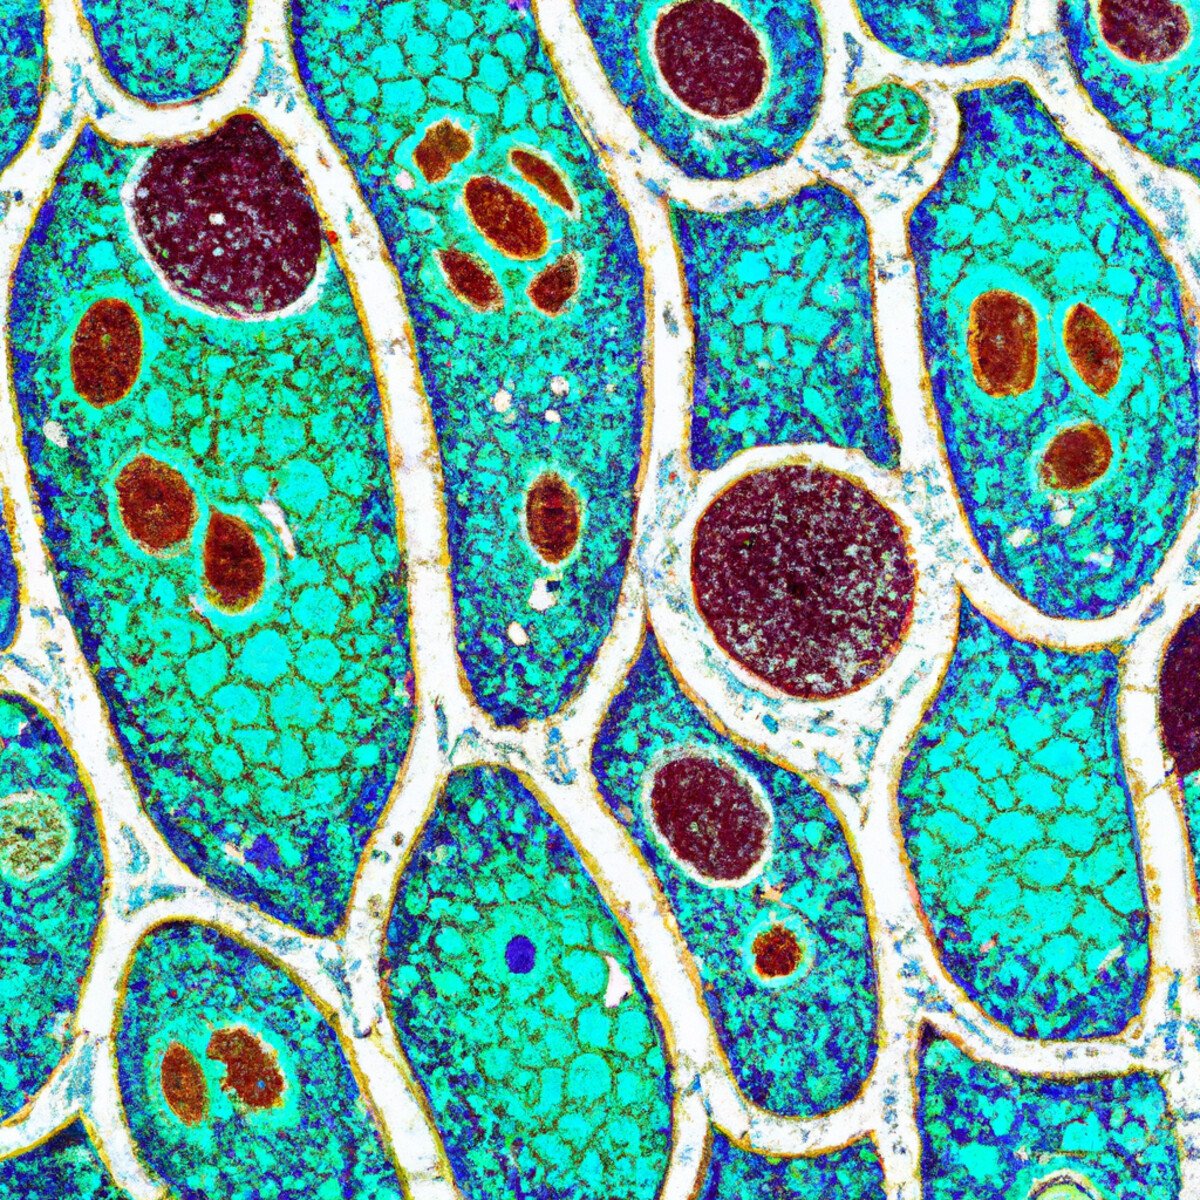 Vibrant close-up of microscope slide reveals intricate collagen fibers, representing collagenous gastritis and autoimmune diseases.